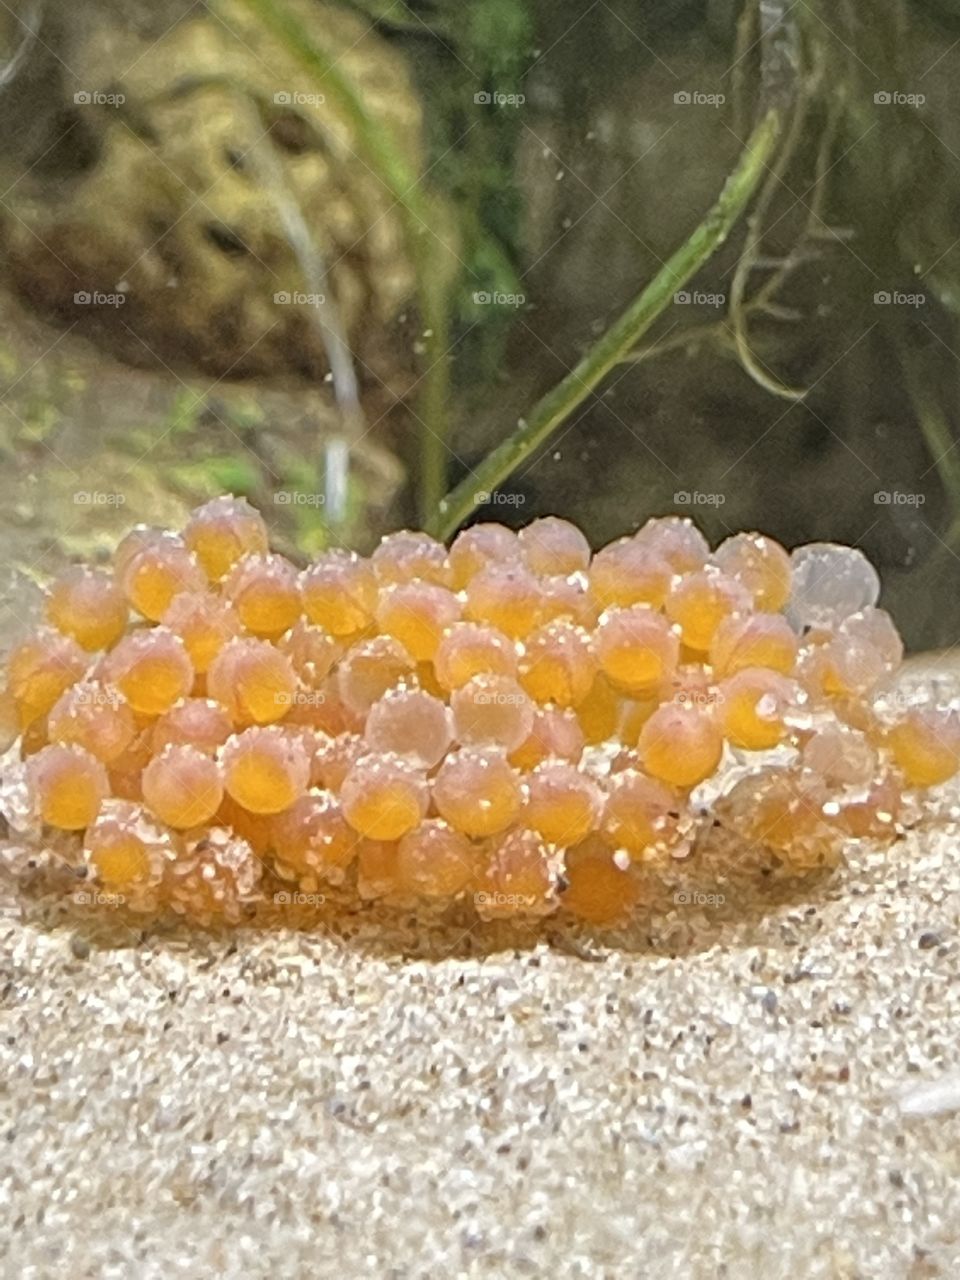 Ancistrus fish eggs offspring 